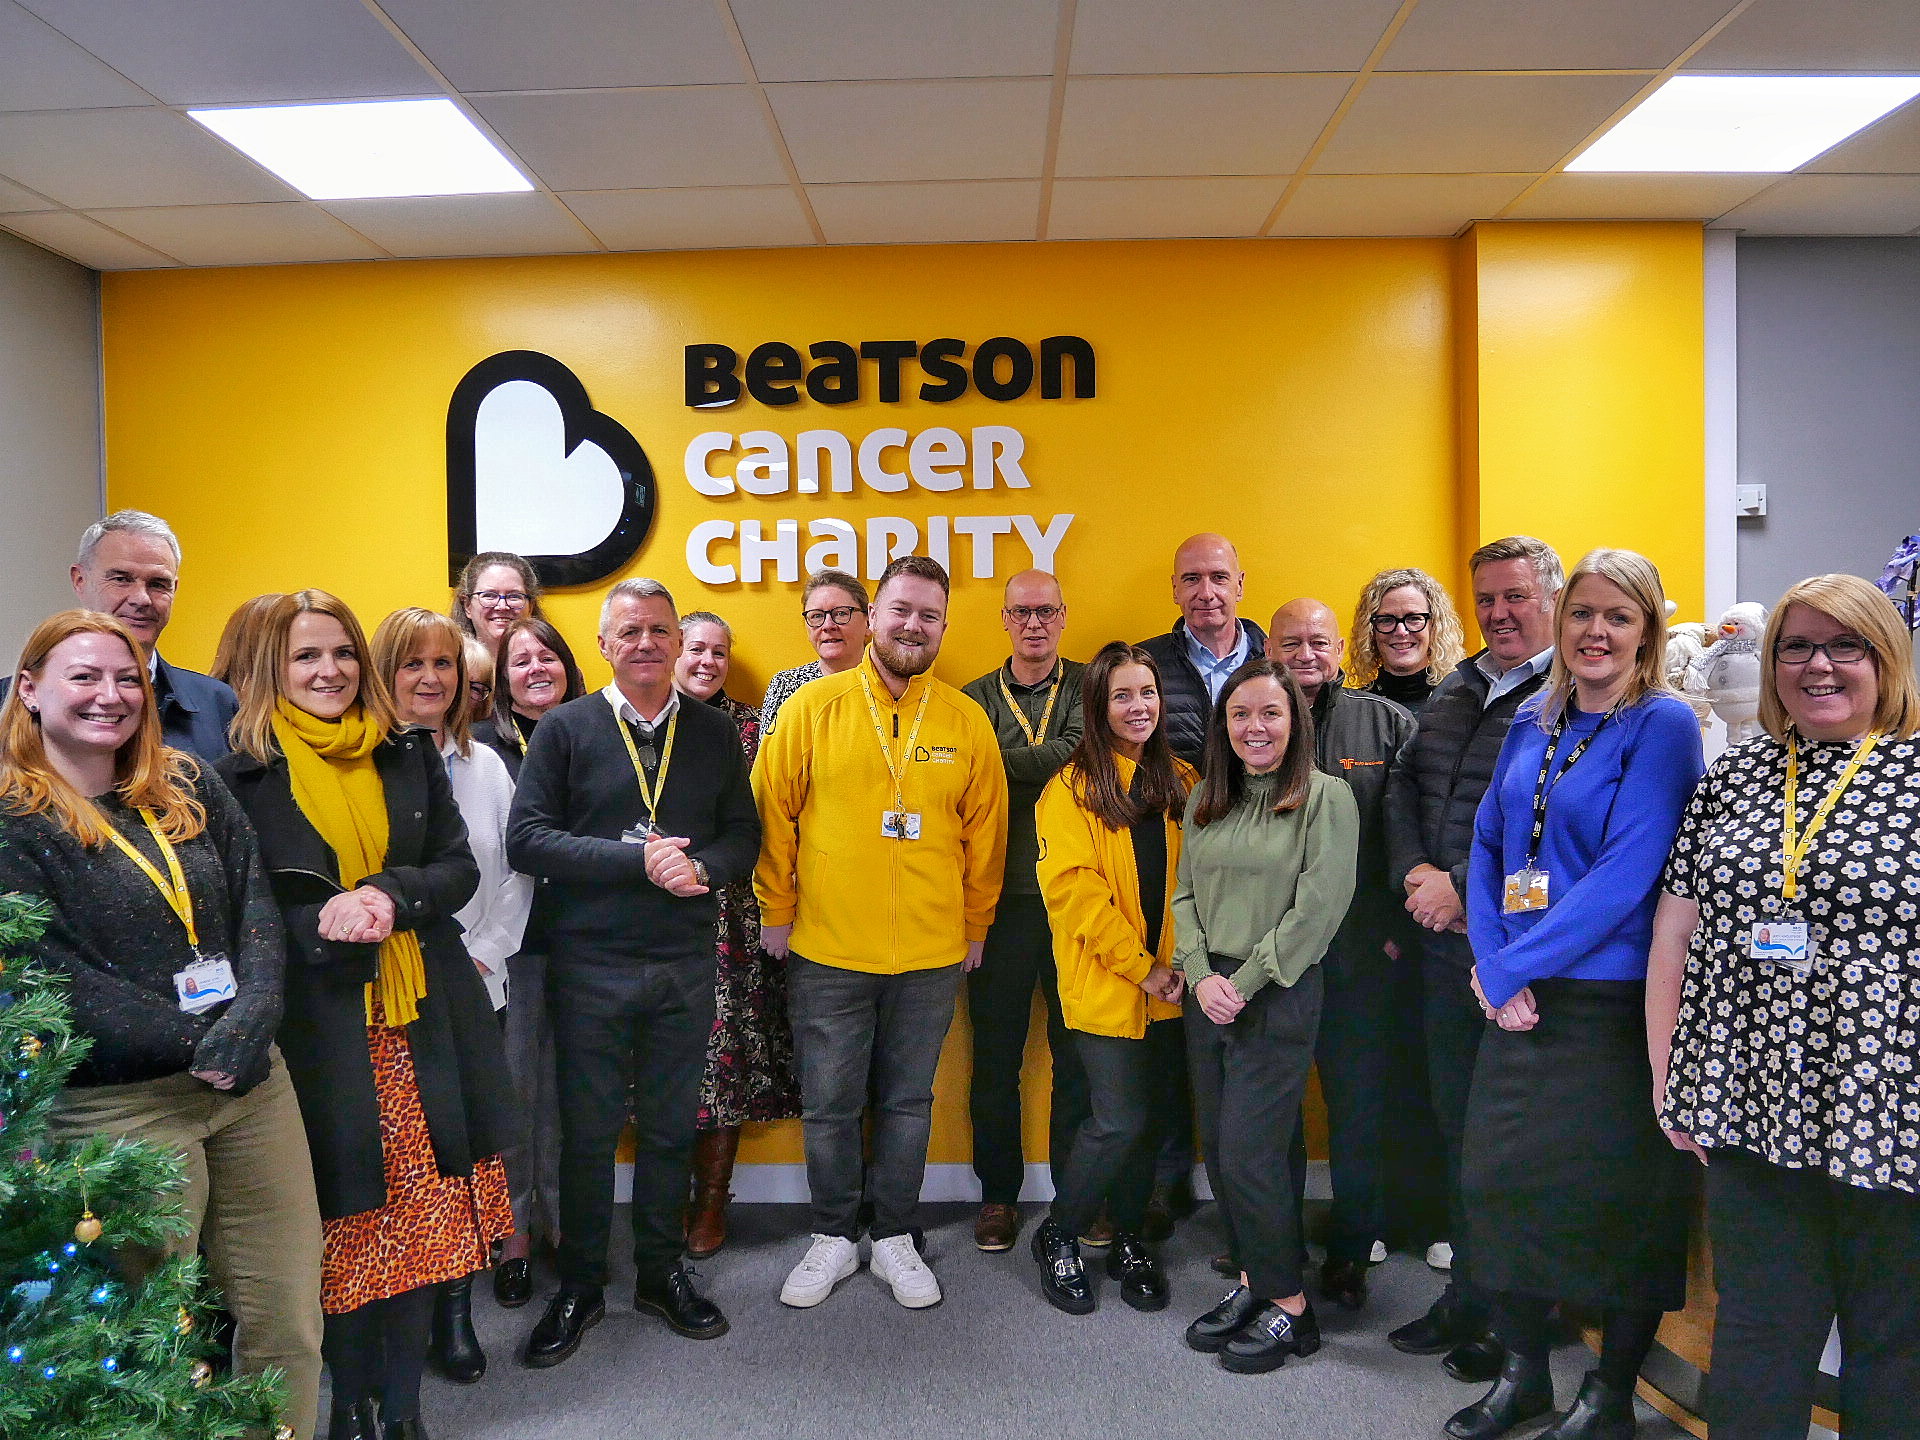 Scottish construction workforce champions Beatson Cancer Charity image